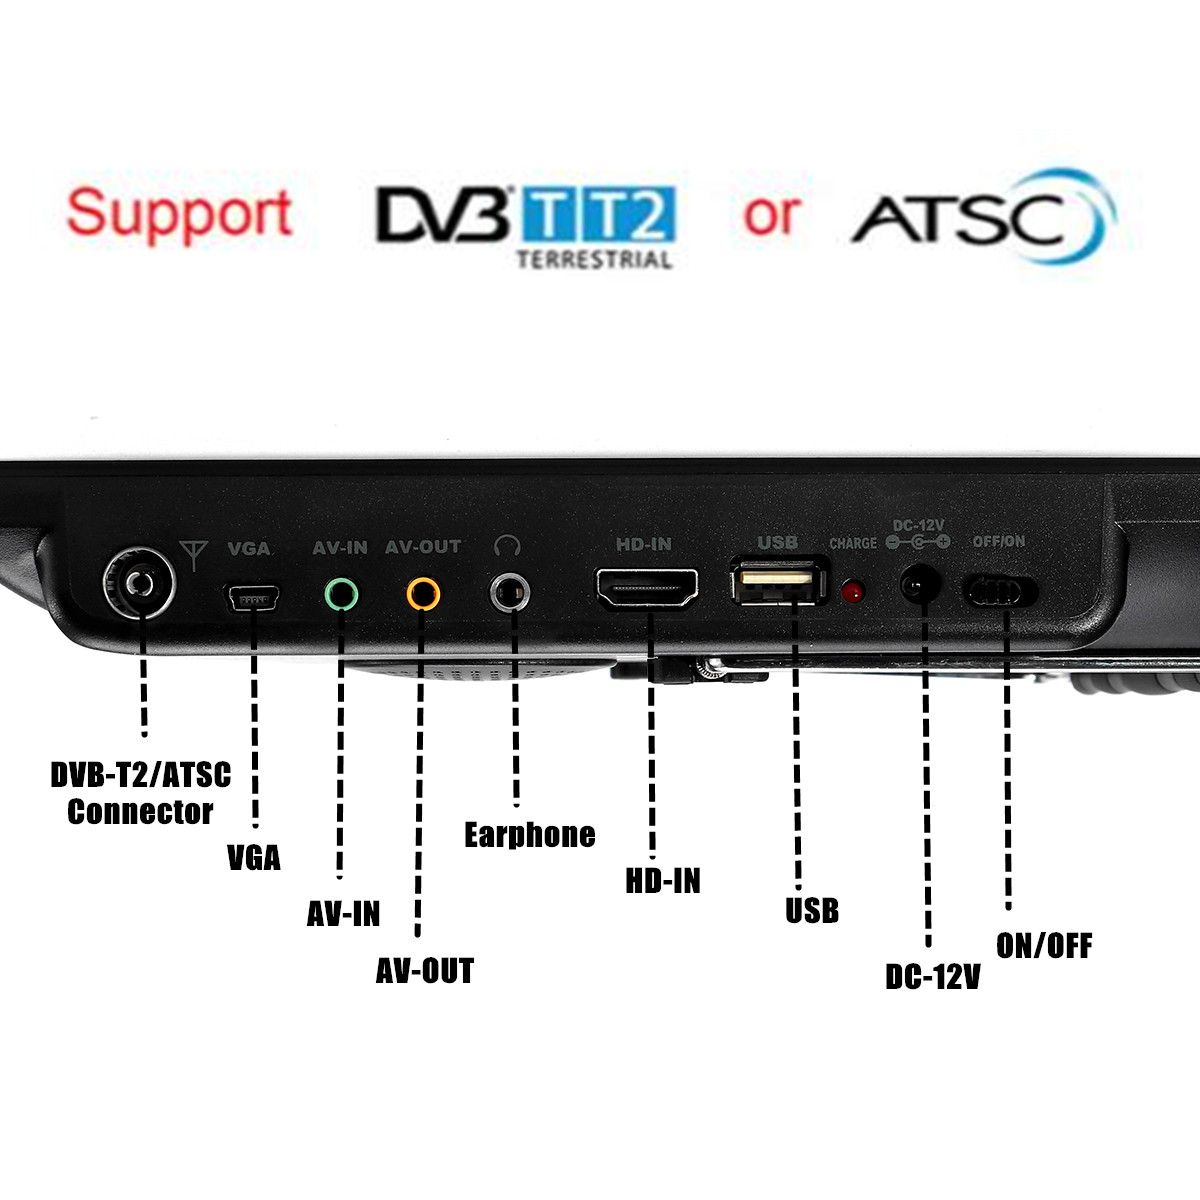 Leadstar-D14-14-inch-Portable-Digital-TFT-LED-TV-DVB-T2-ATSC-169-Analog-Television-HD-H265-Video-Pla-1629714